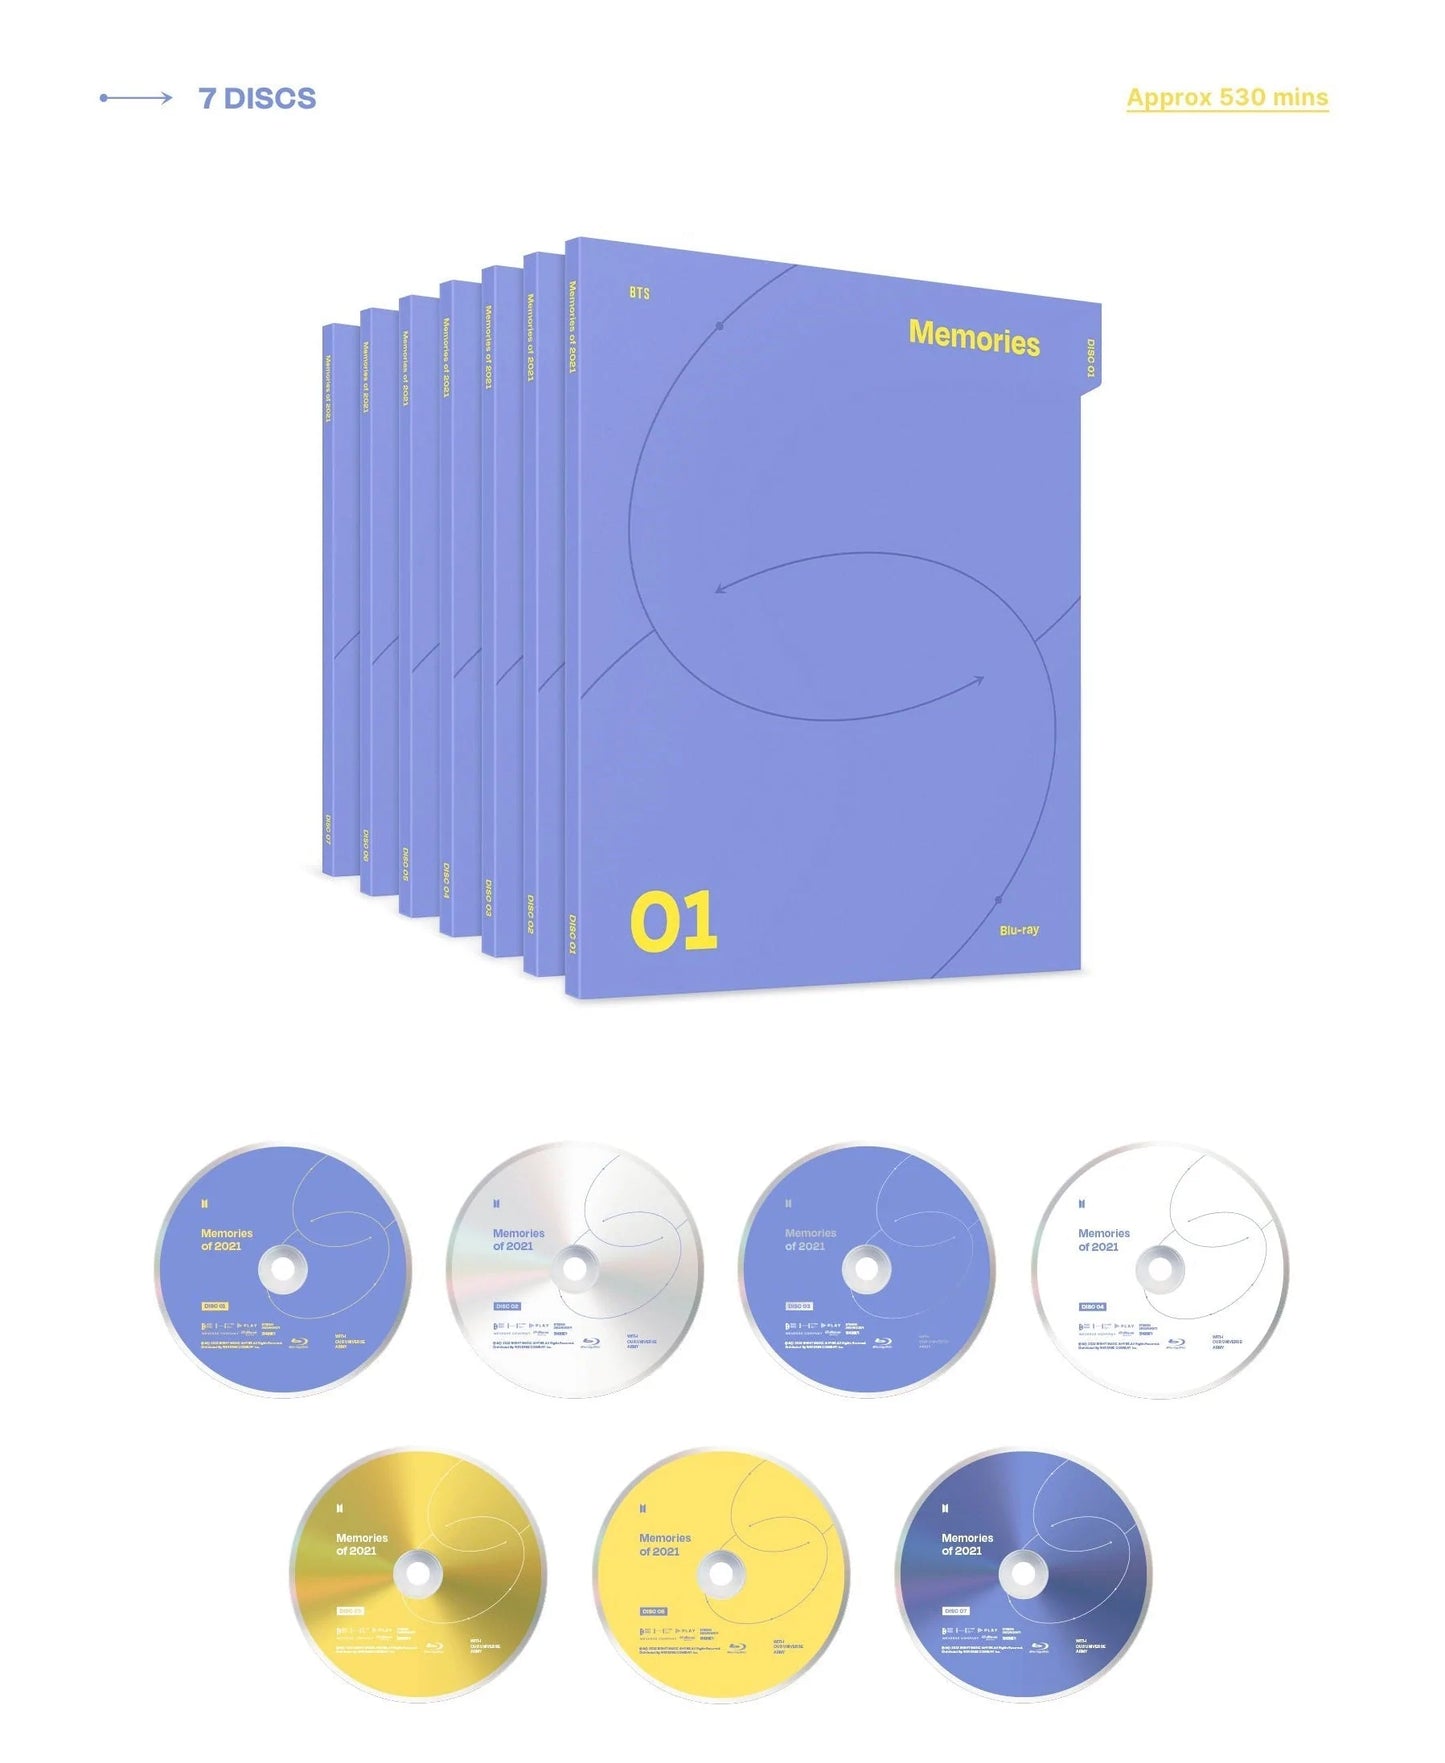 BTS - Memories of 2021 (Blu-Ray)